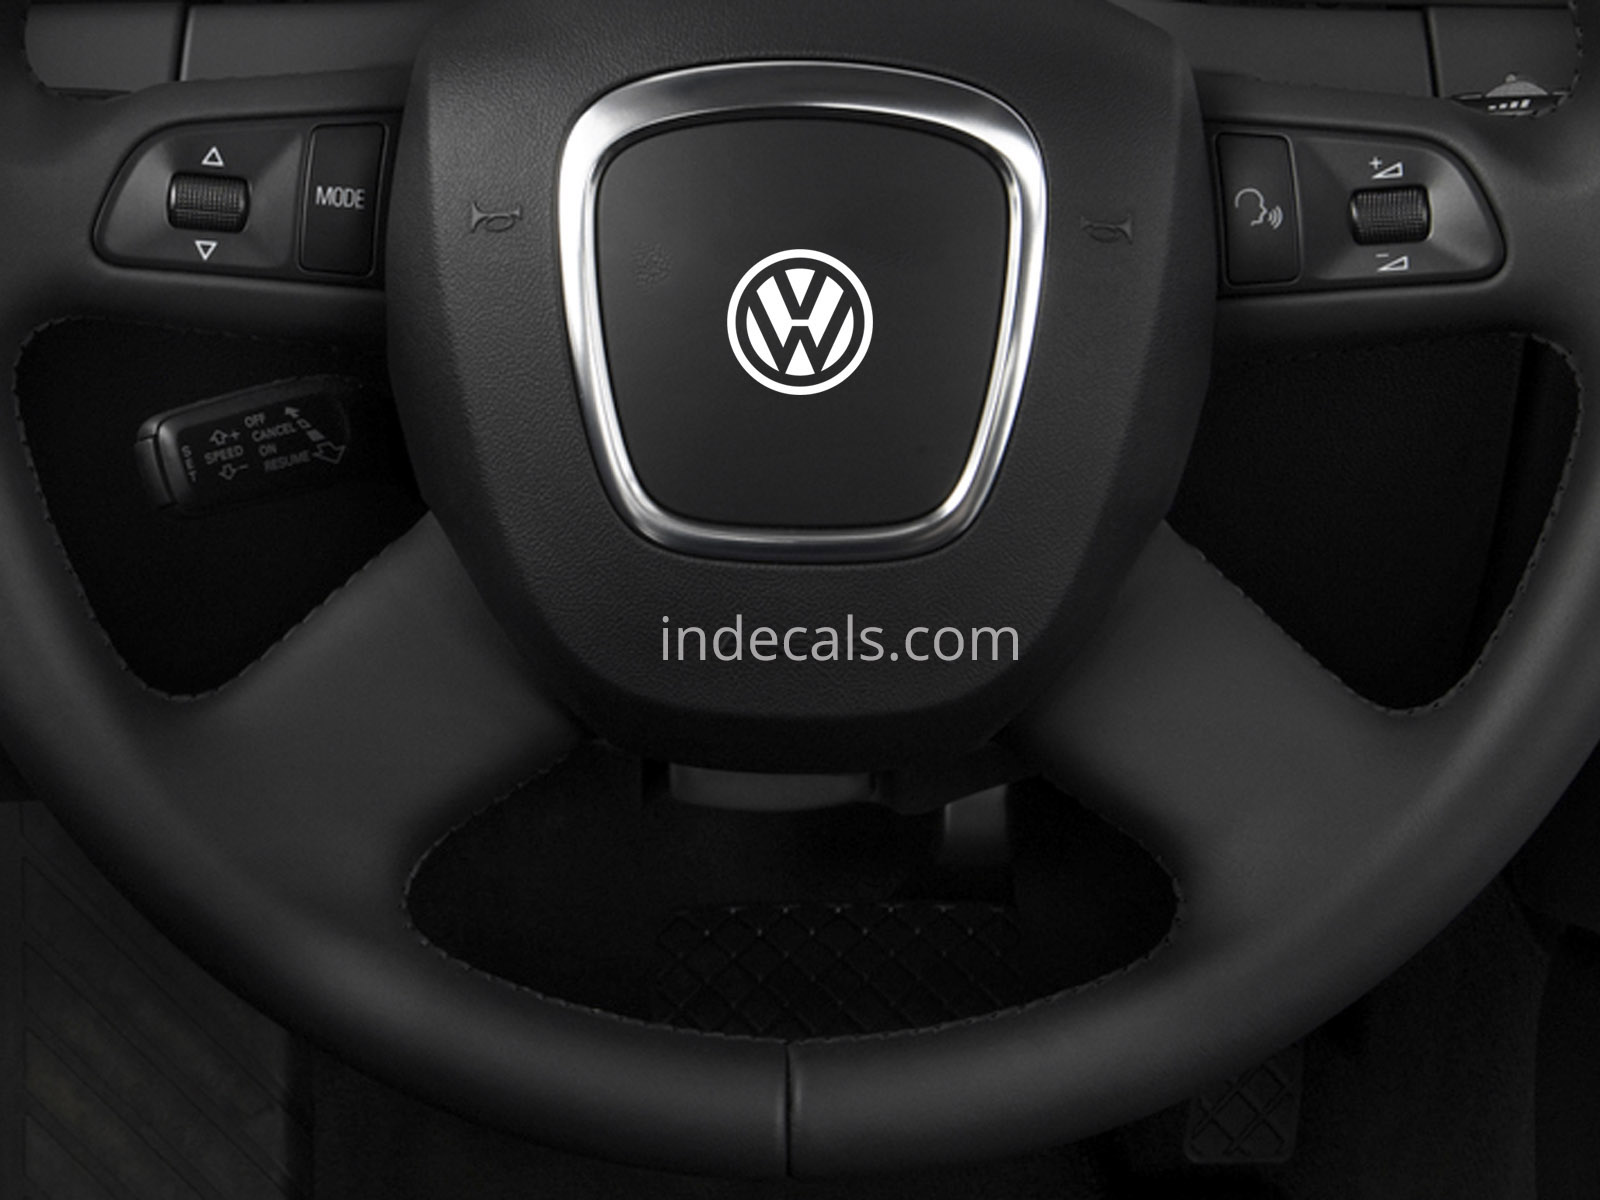 3 x Volkswagen Stickers for Steering Wheel - White